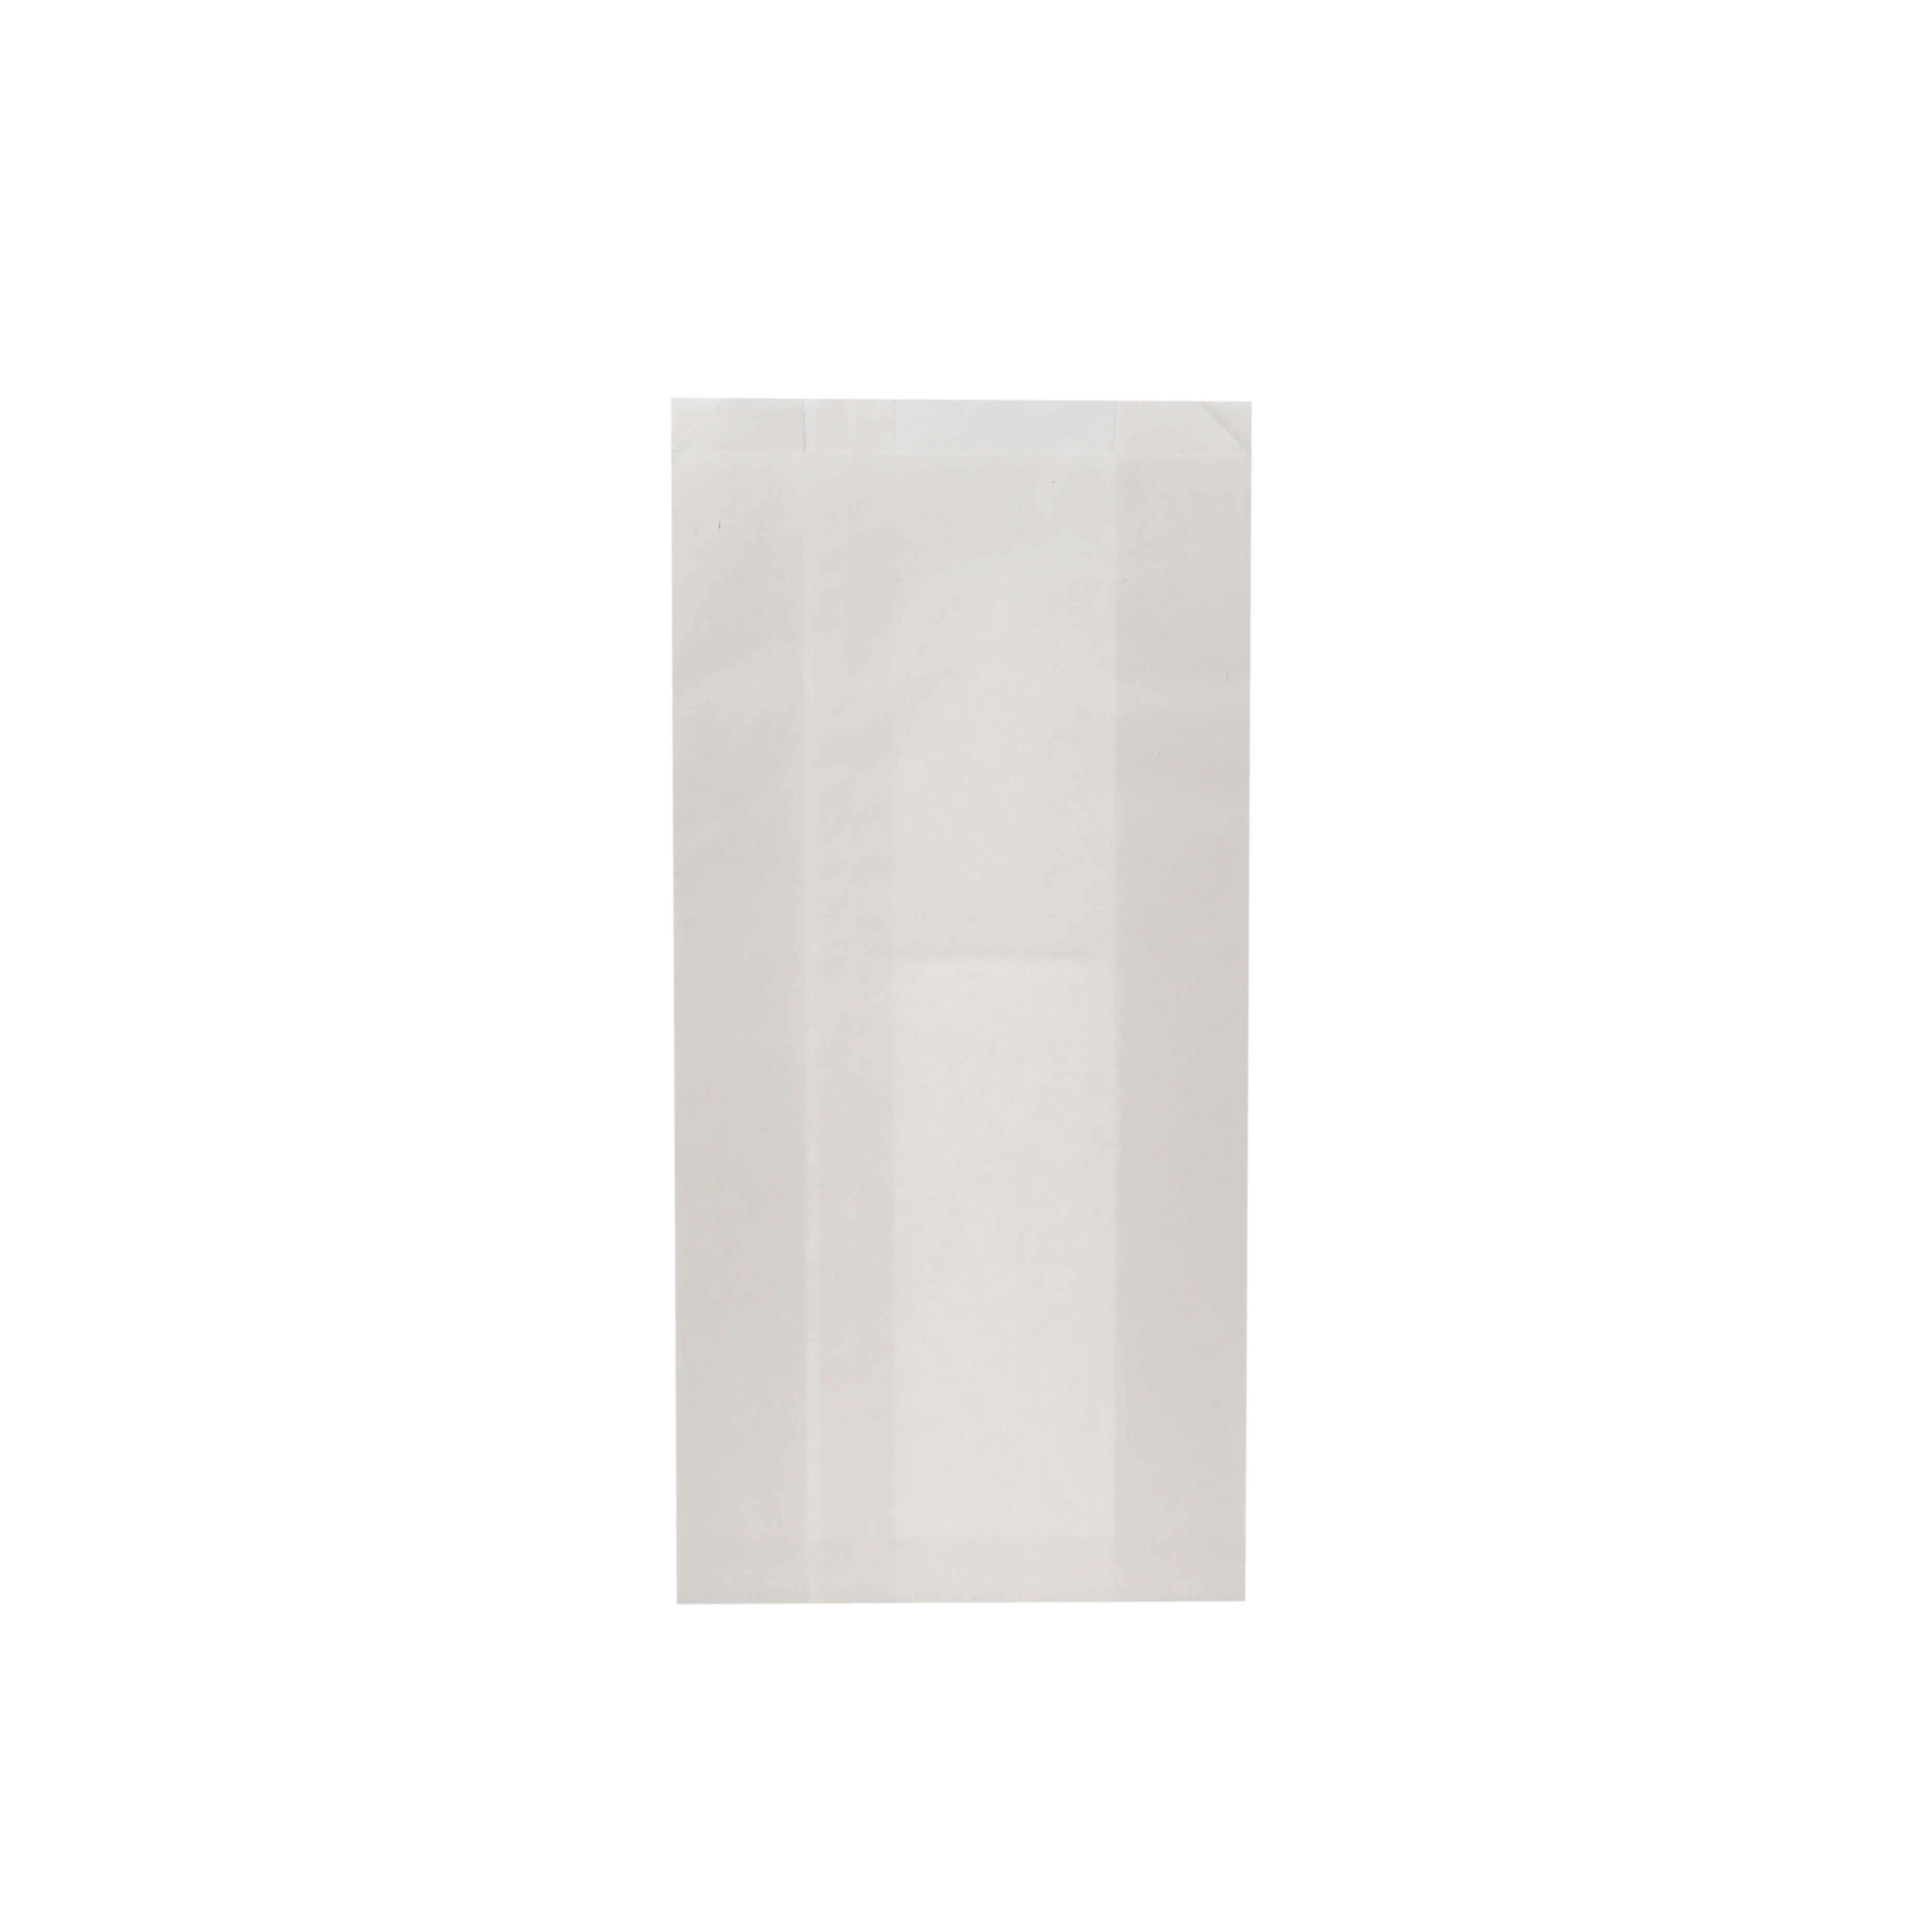  No.3 Pinch or flat bottom paper bag white - Hotpack Global